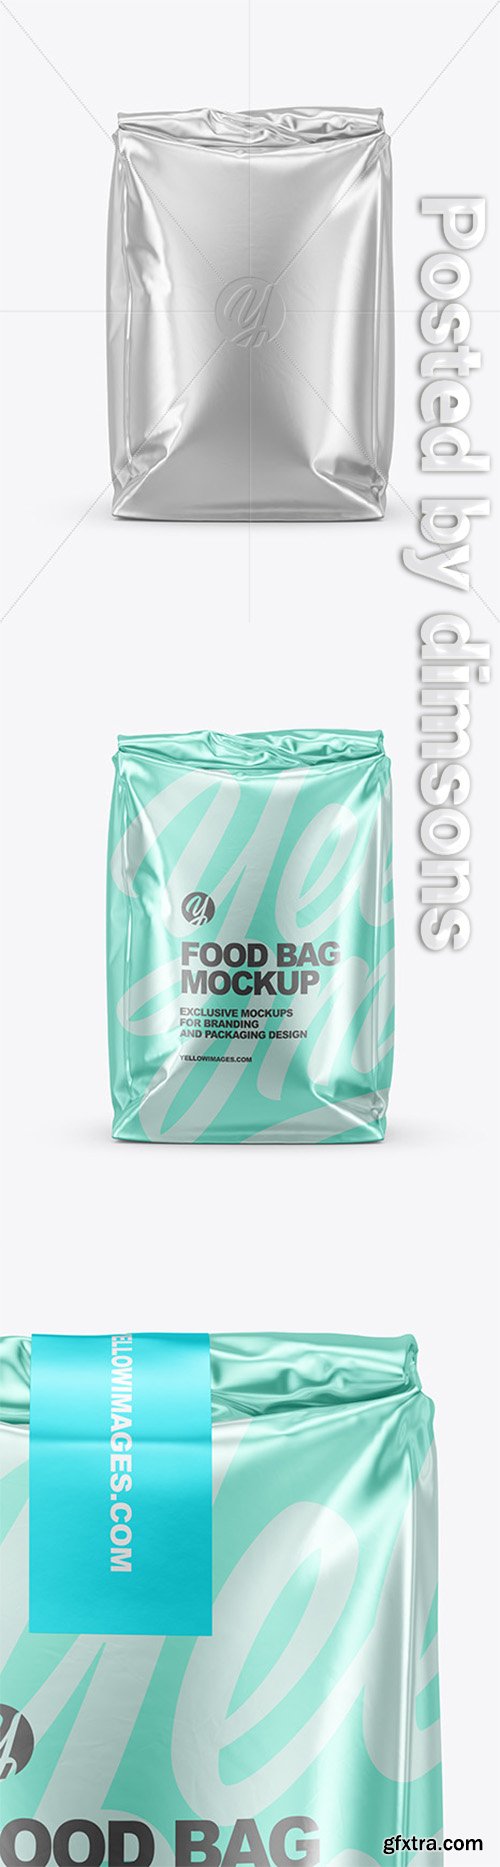 Metallic Food Bag Mockup - Front View 64900